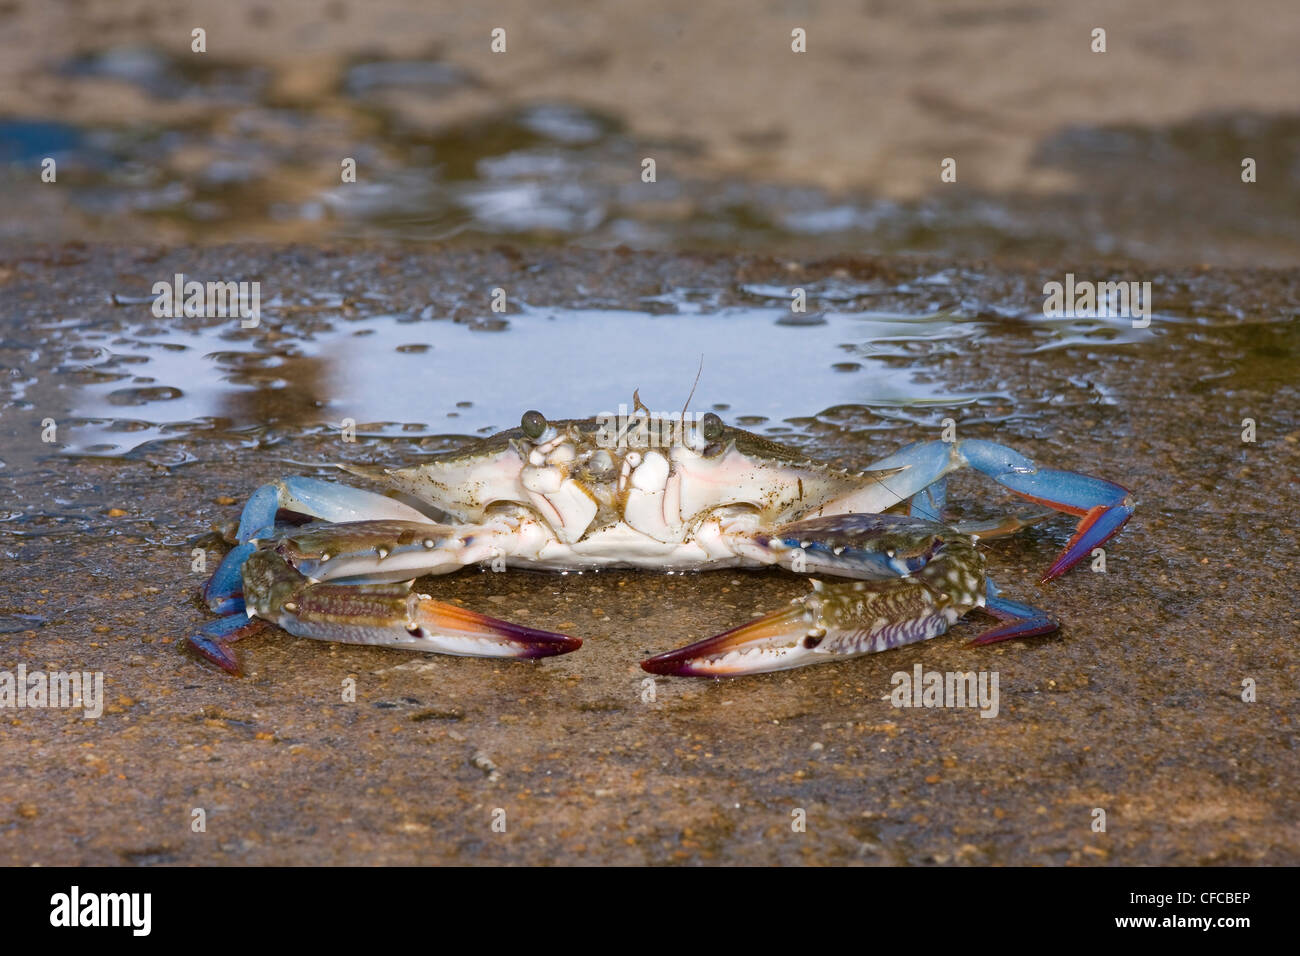 Asia, close-up, fauna, arthropod, crab, crabs, crustacean, close-up, nature South-East Asia, beach, seashore, animal, beast, Vie Stock Photo